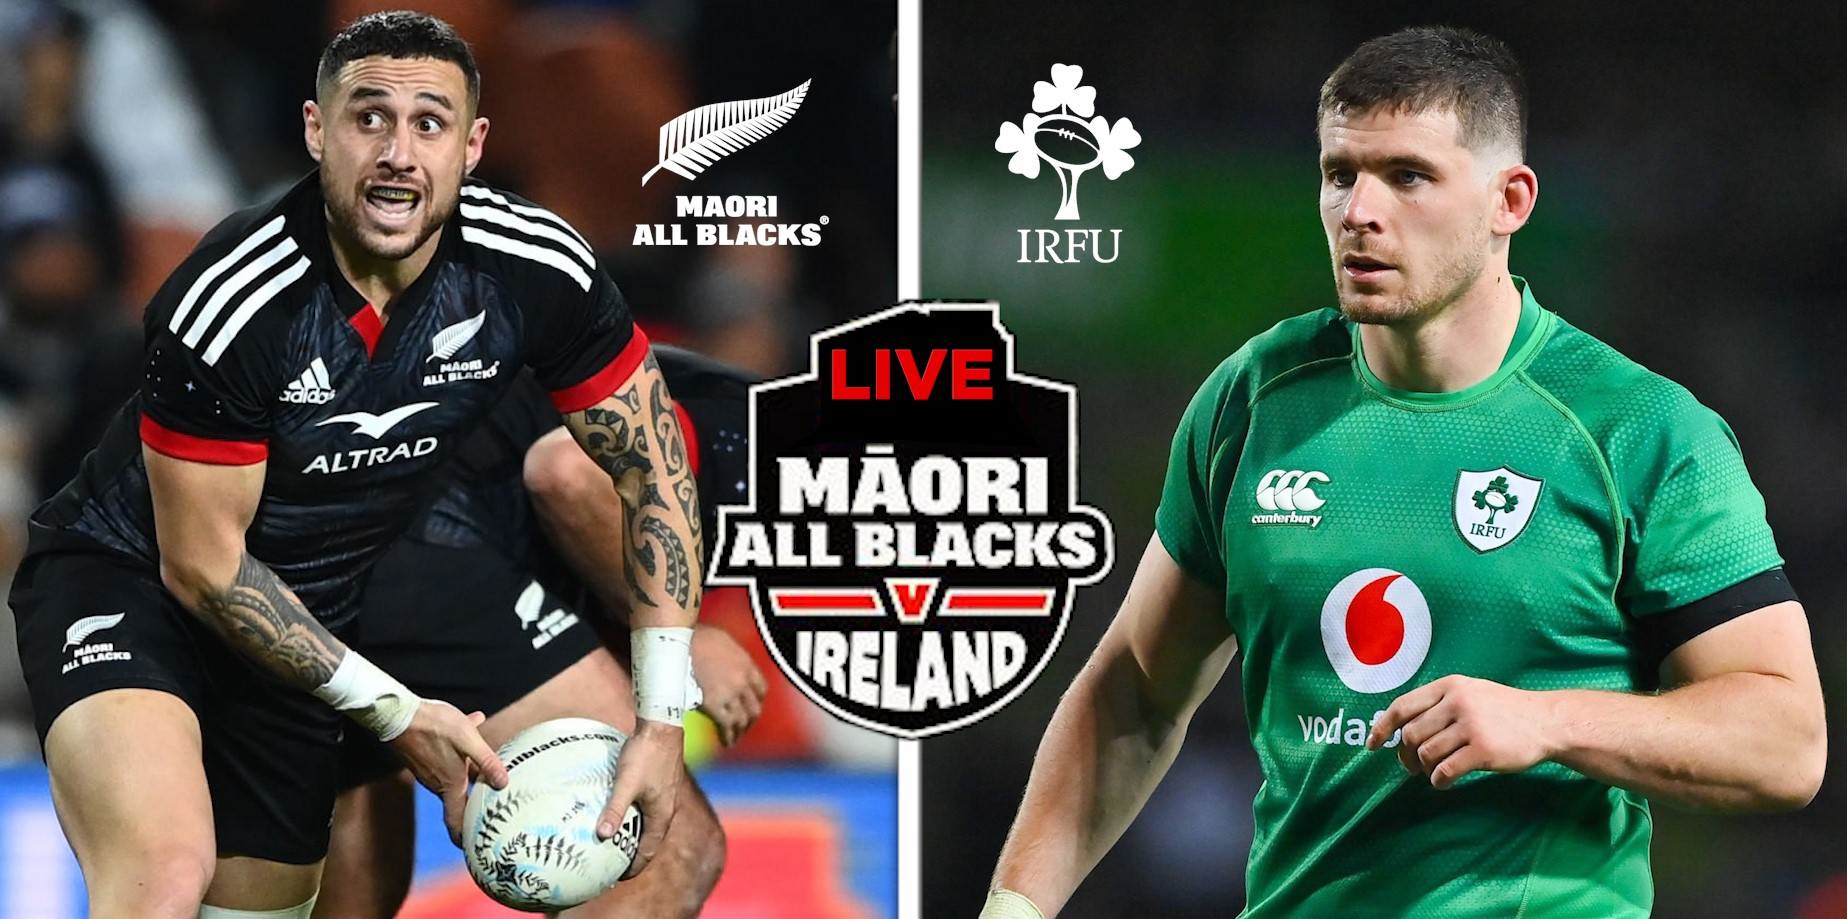 Maori All Blacks vs Ireland LIVE